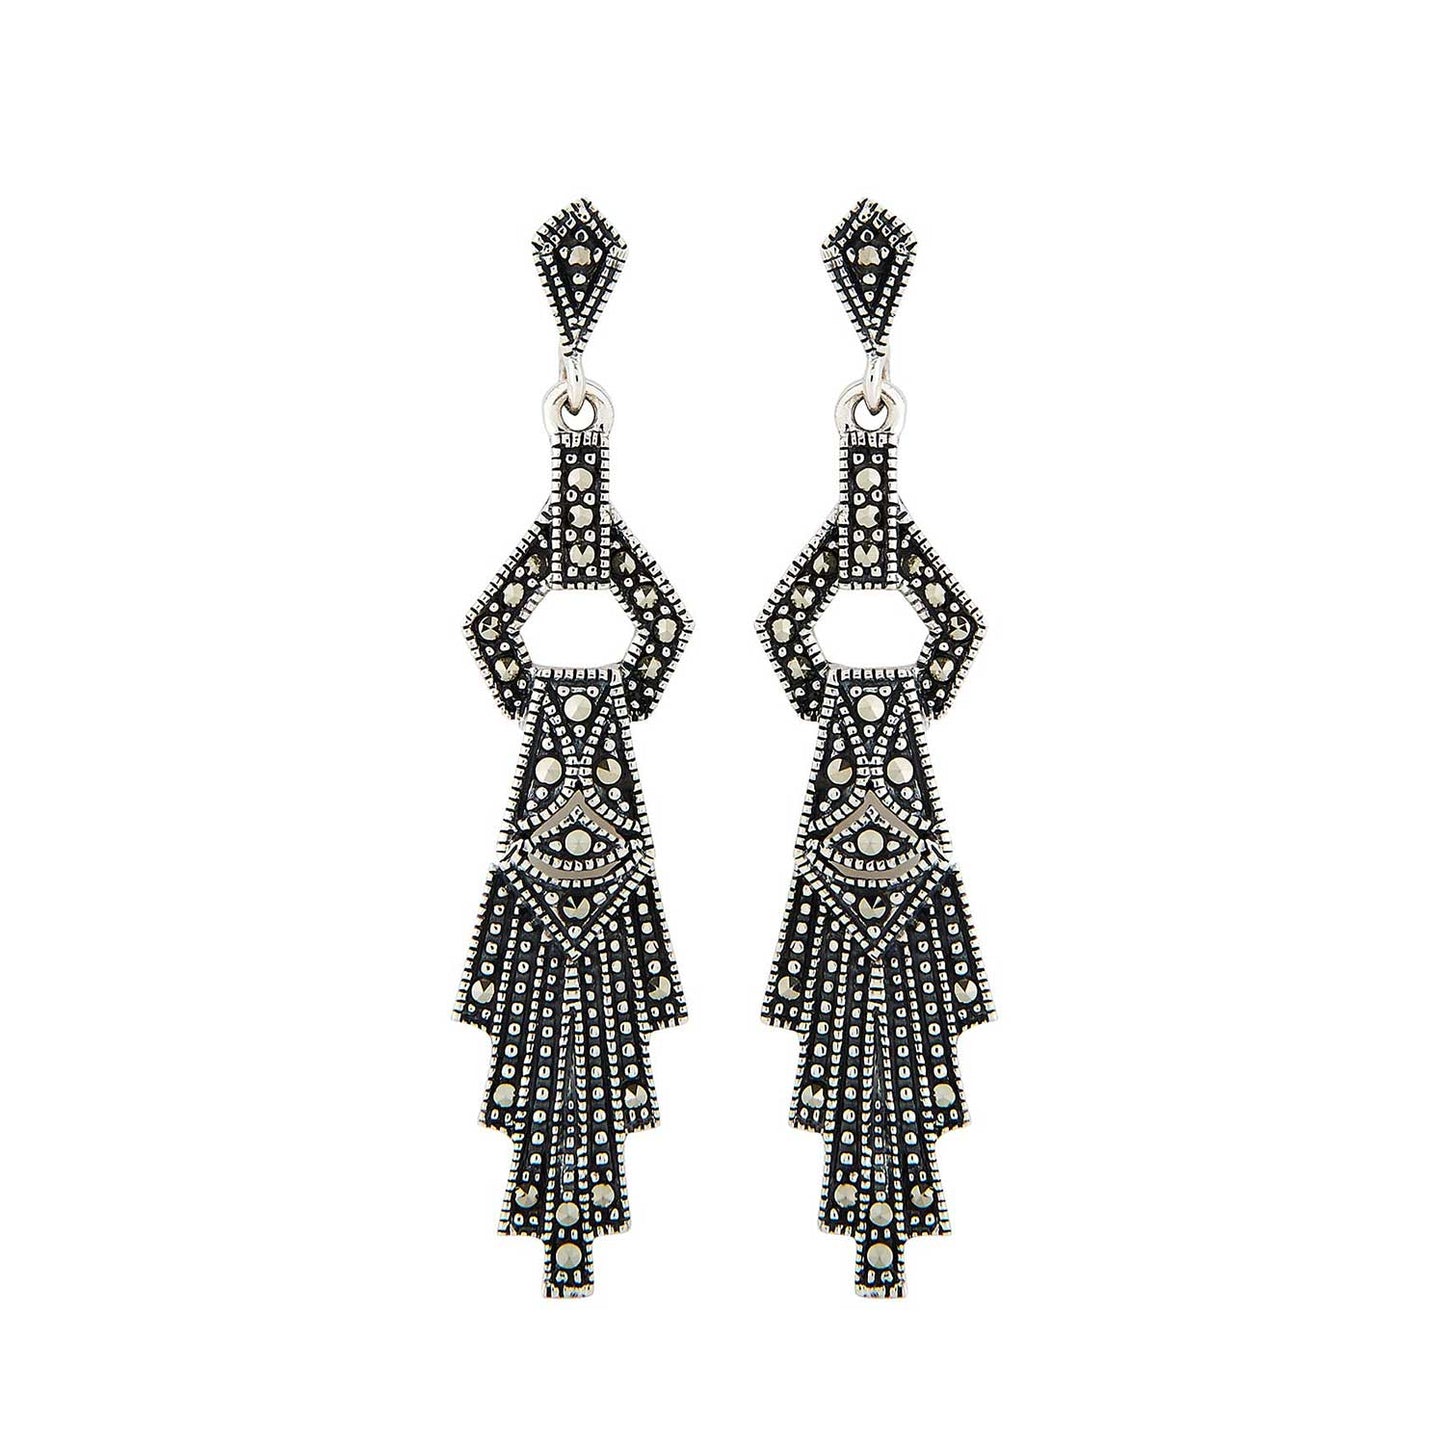 Penelope: Art Deco Drop Earrings in Marcasite and Sterling Silver